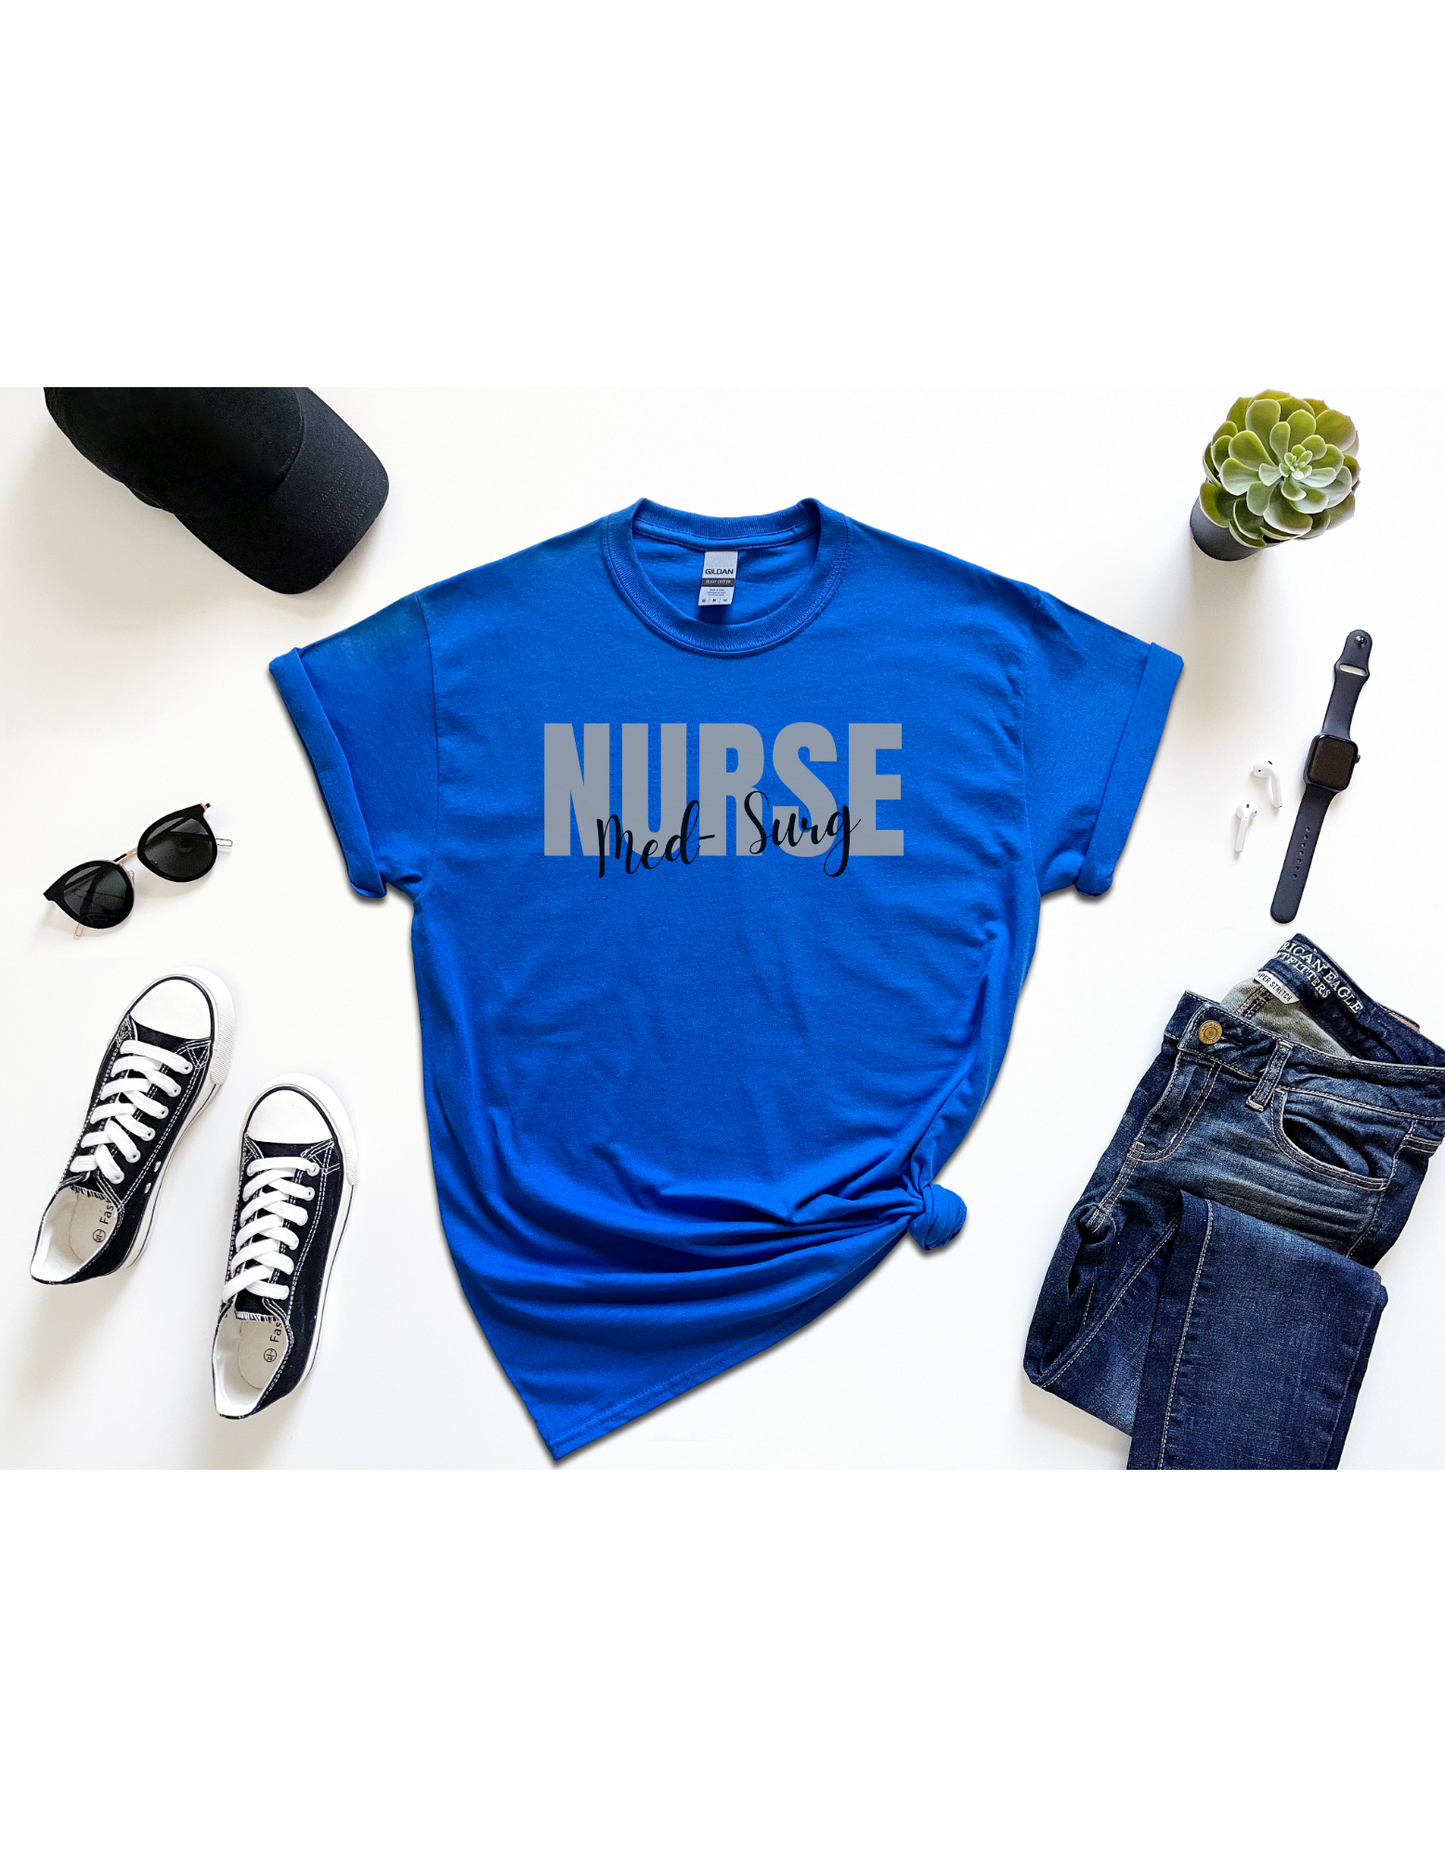 Med-Surg NURSE Tee, Healthcare Heros Shirt, Nursing Tee